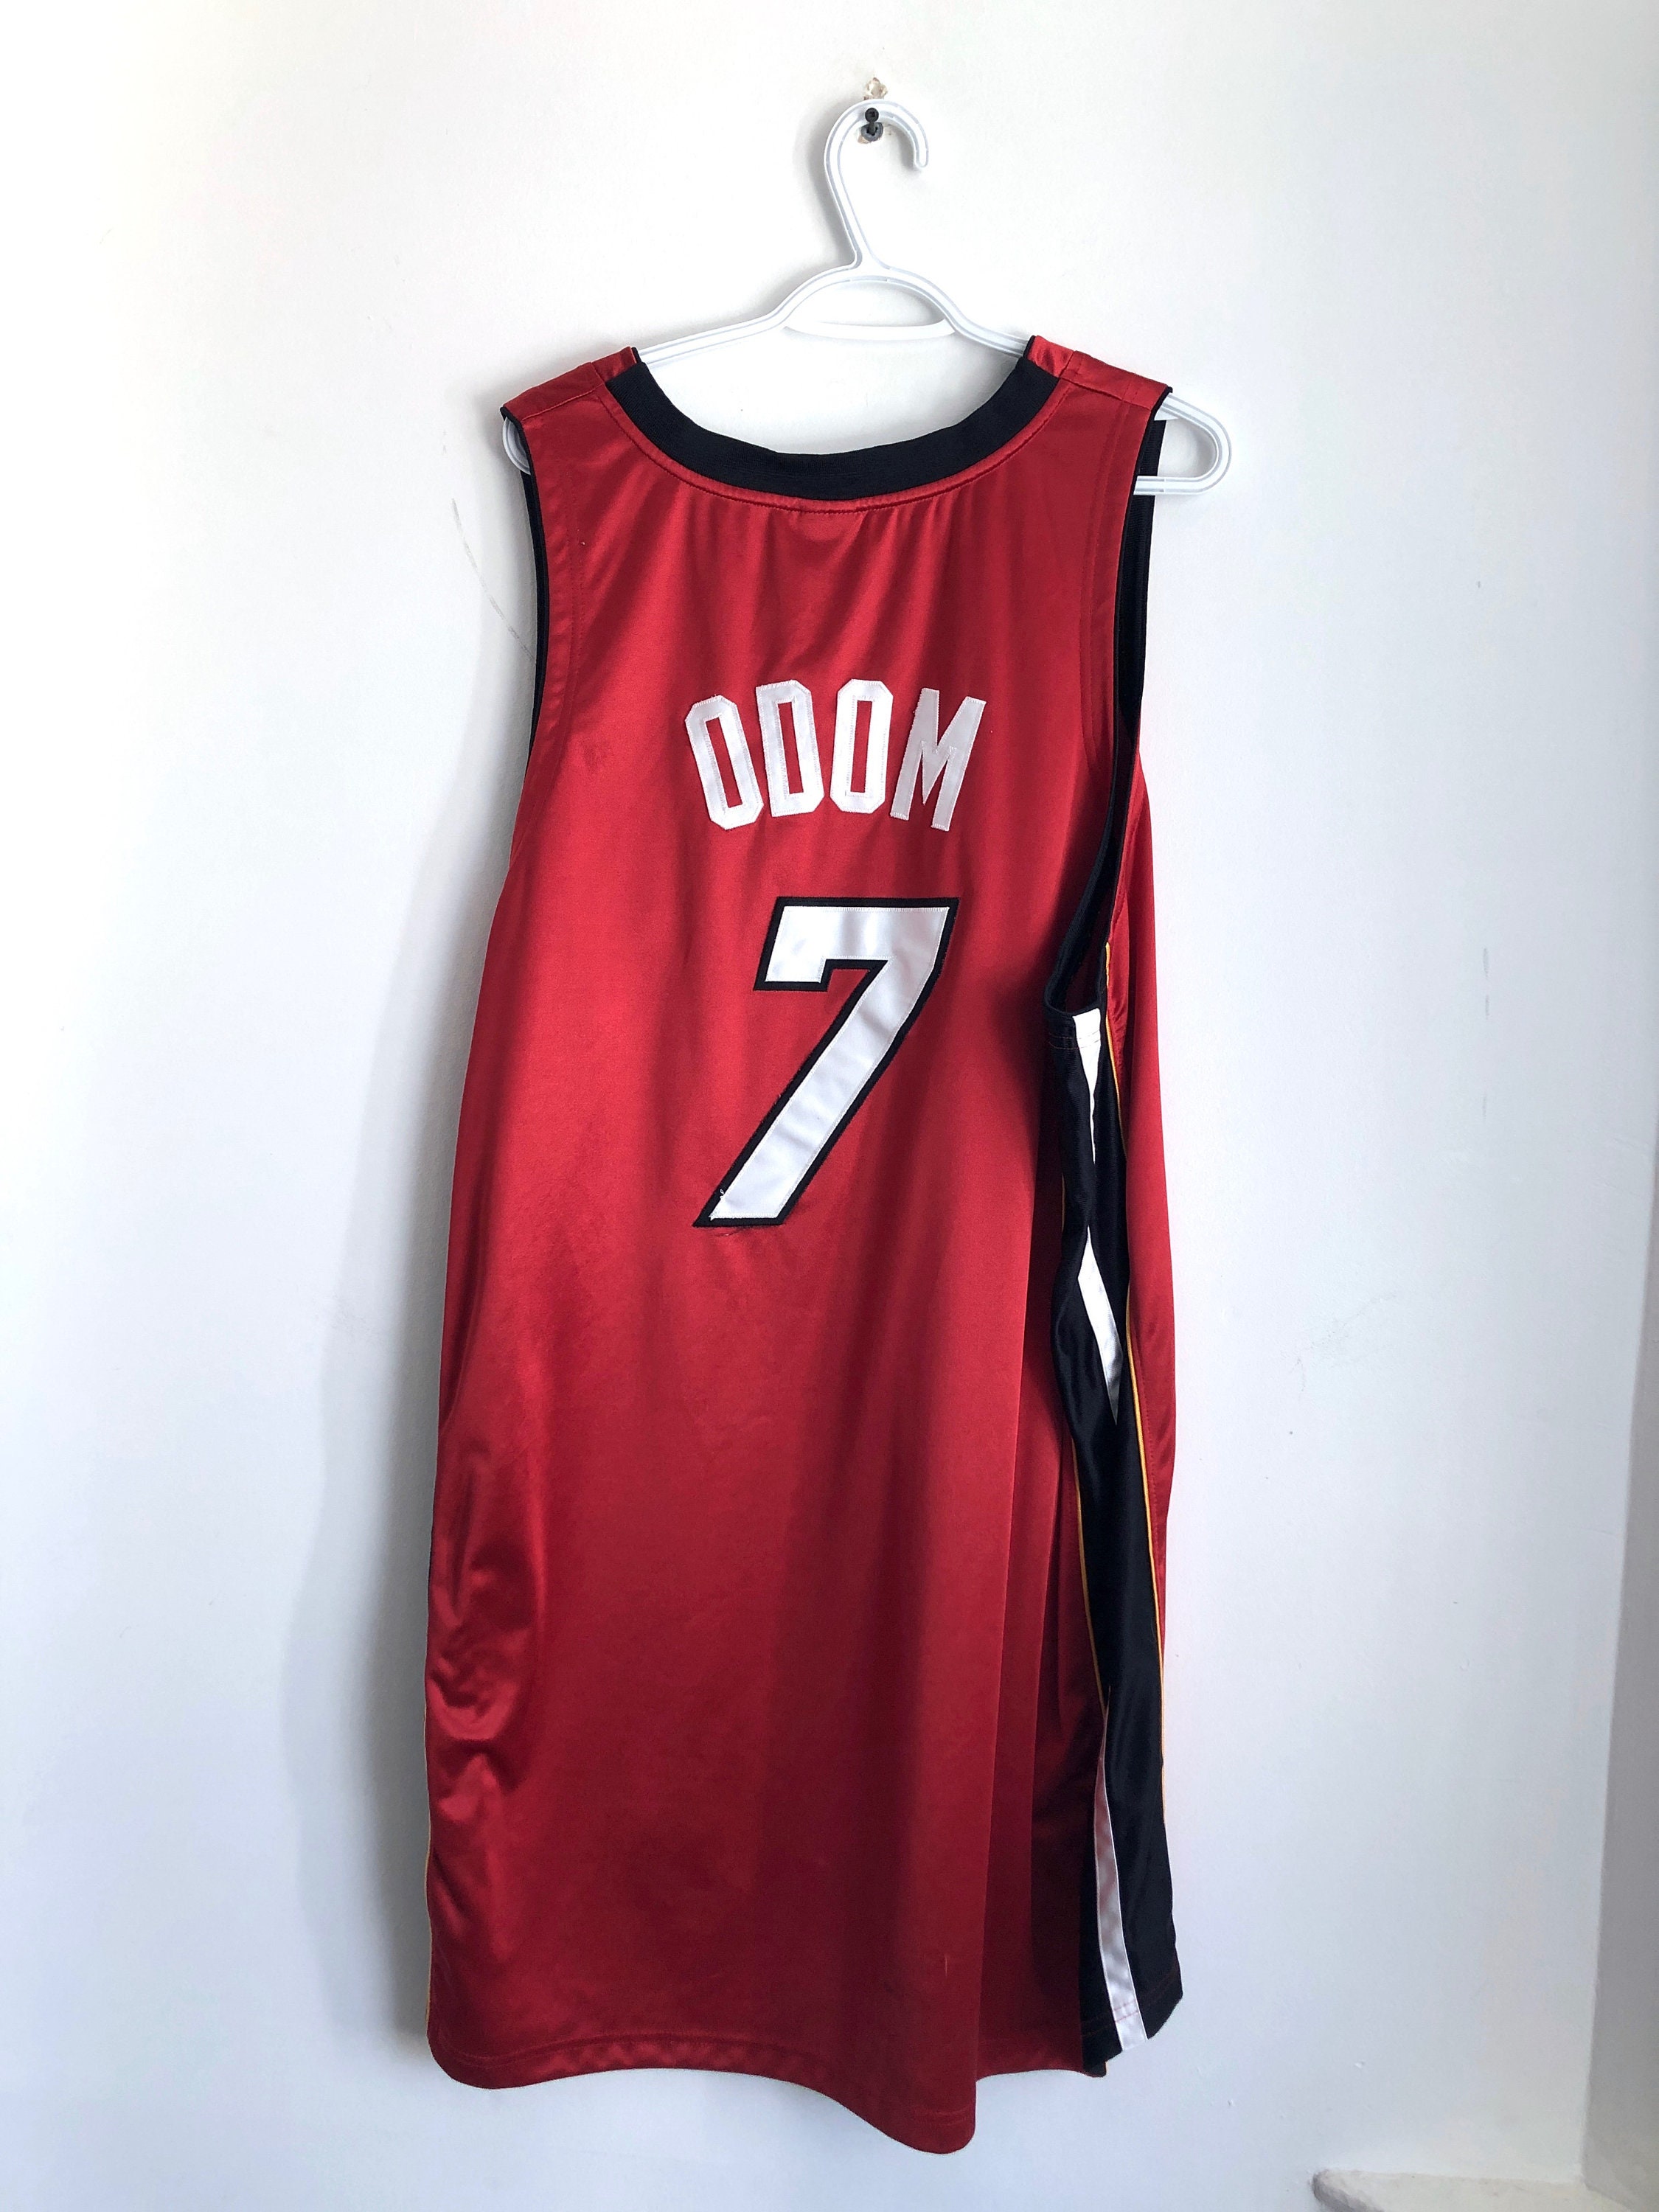 Adidas NBA Miami Heat Long Sleeve Shooting Shirt Jersey Size Small